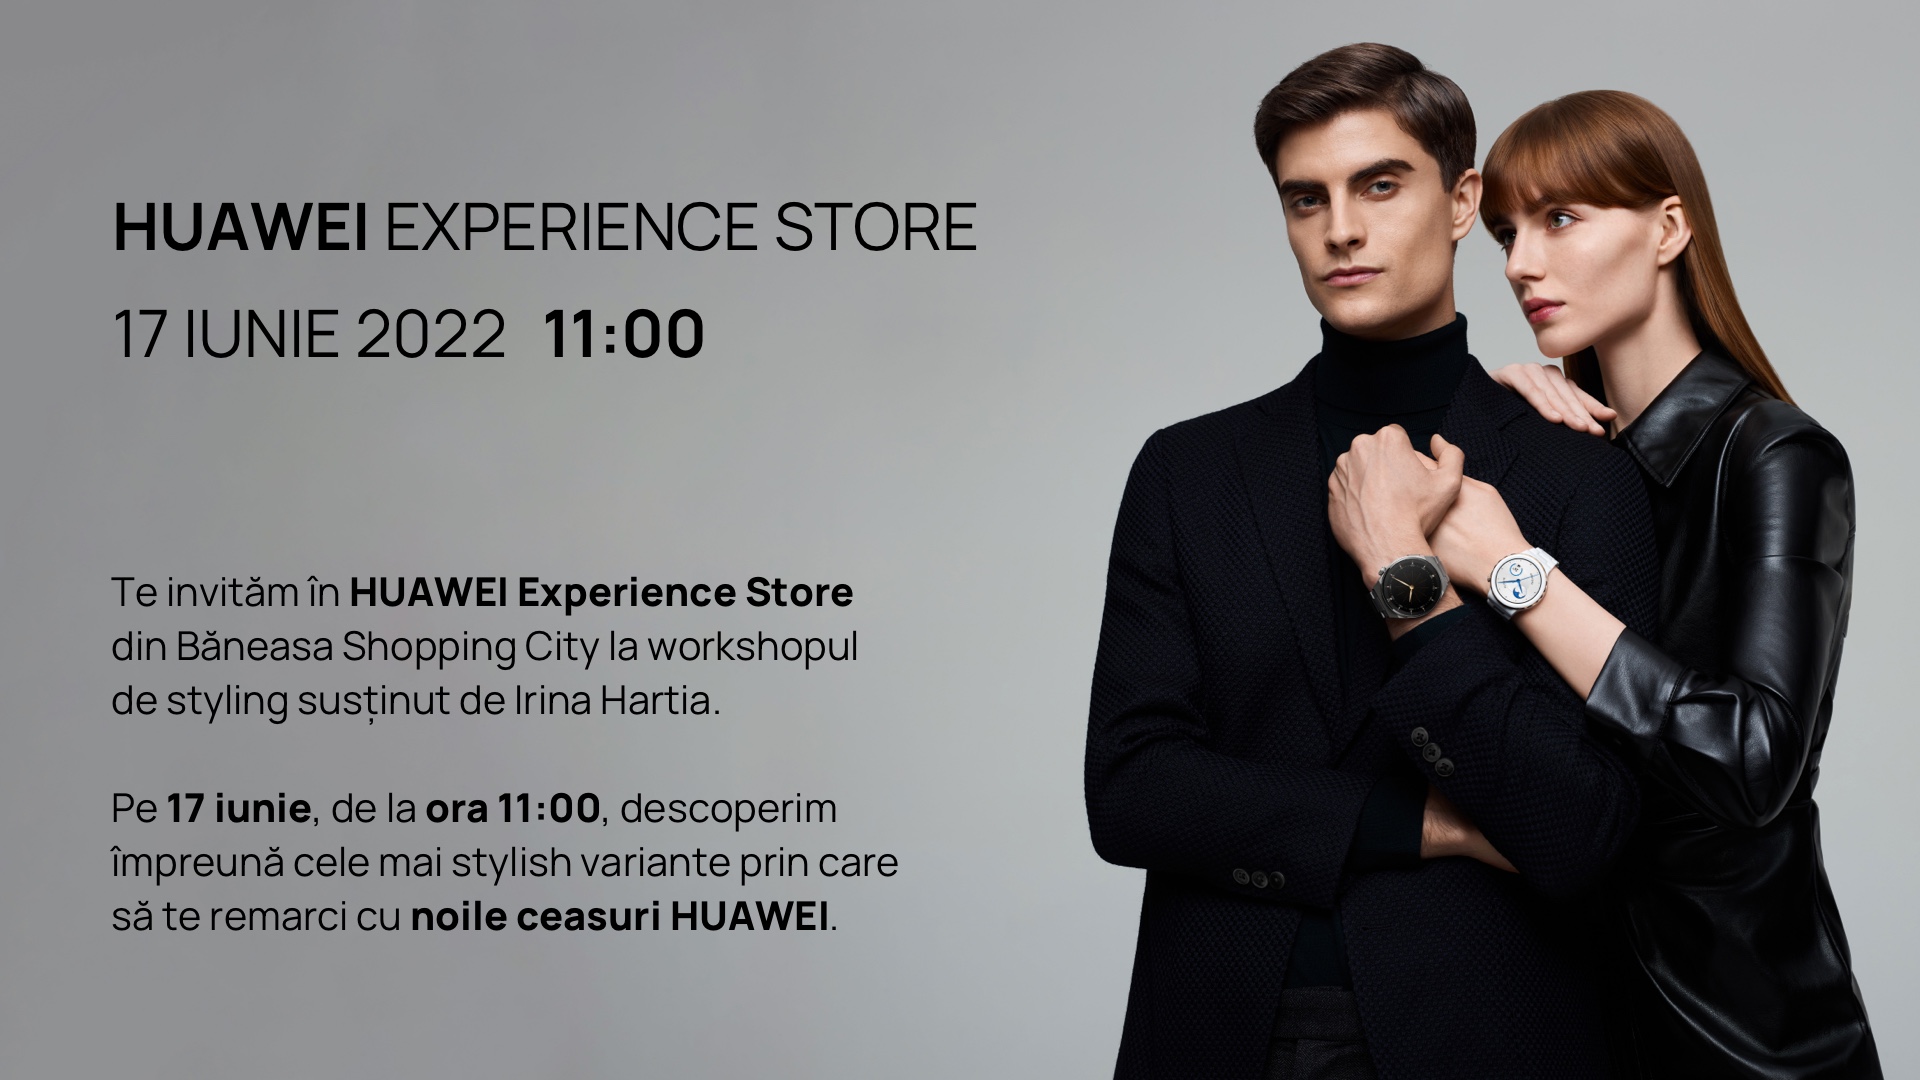 Vezi combinația perfectă dintre fashion și inovație la Huawei Experience Store